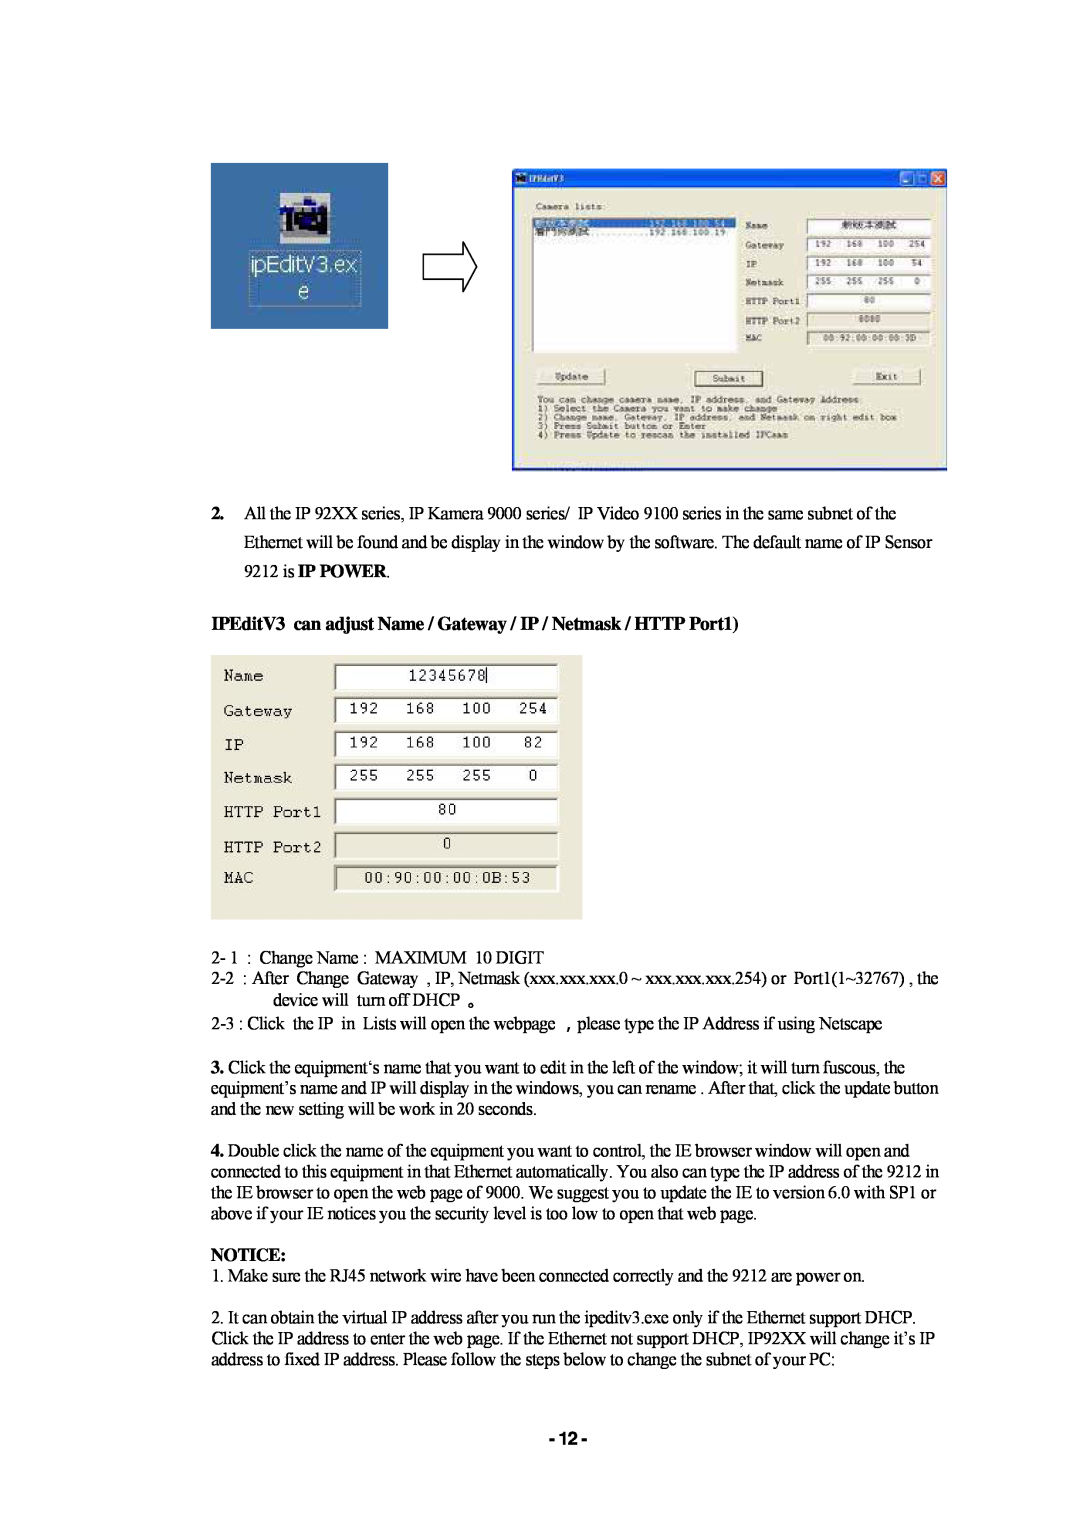 New Media Technology 9212 manual IPEditV3 can adjust Name / Gateway / IP / Netmask / HTTP Port1 